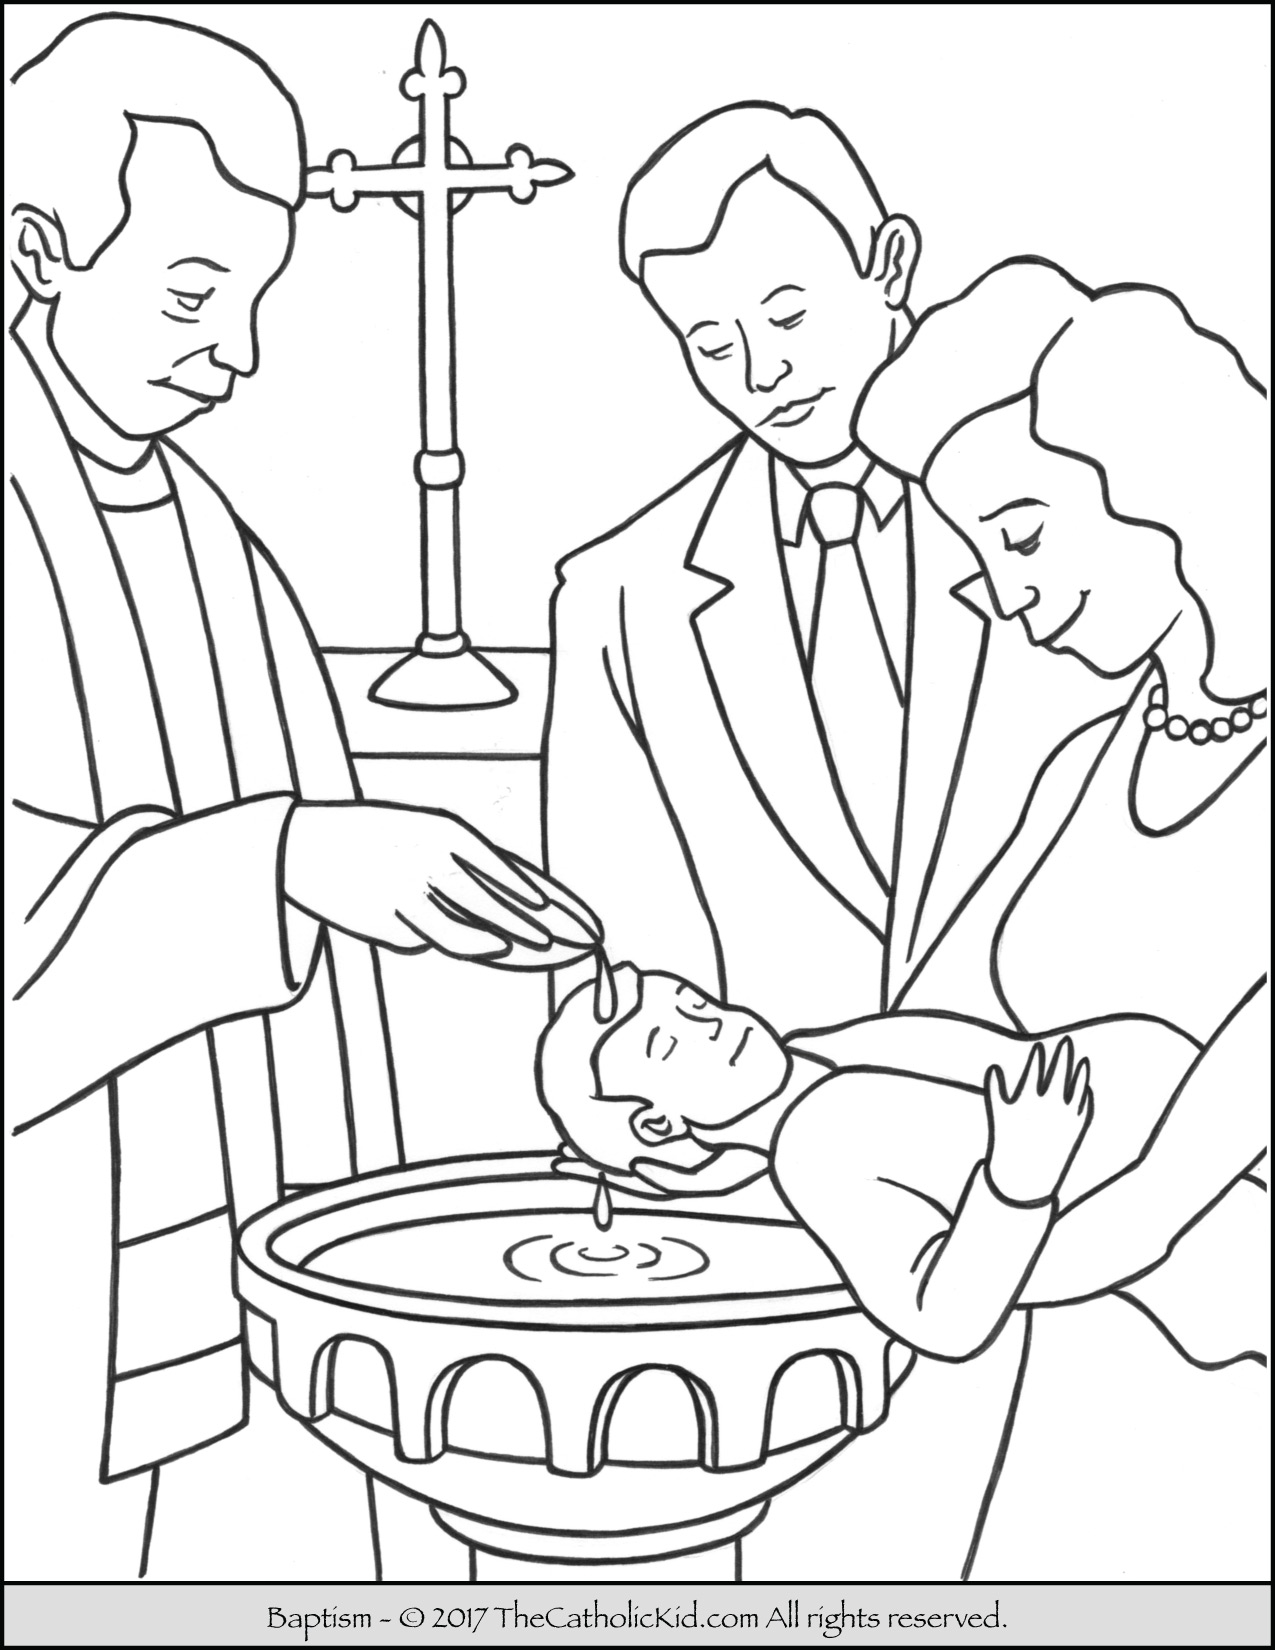 baptism-coloring-pages-catholic-kids-sacraments-church-printable